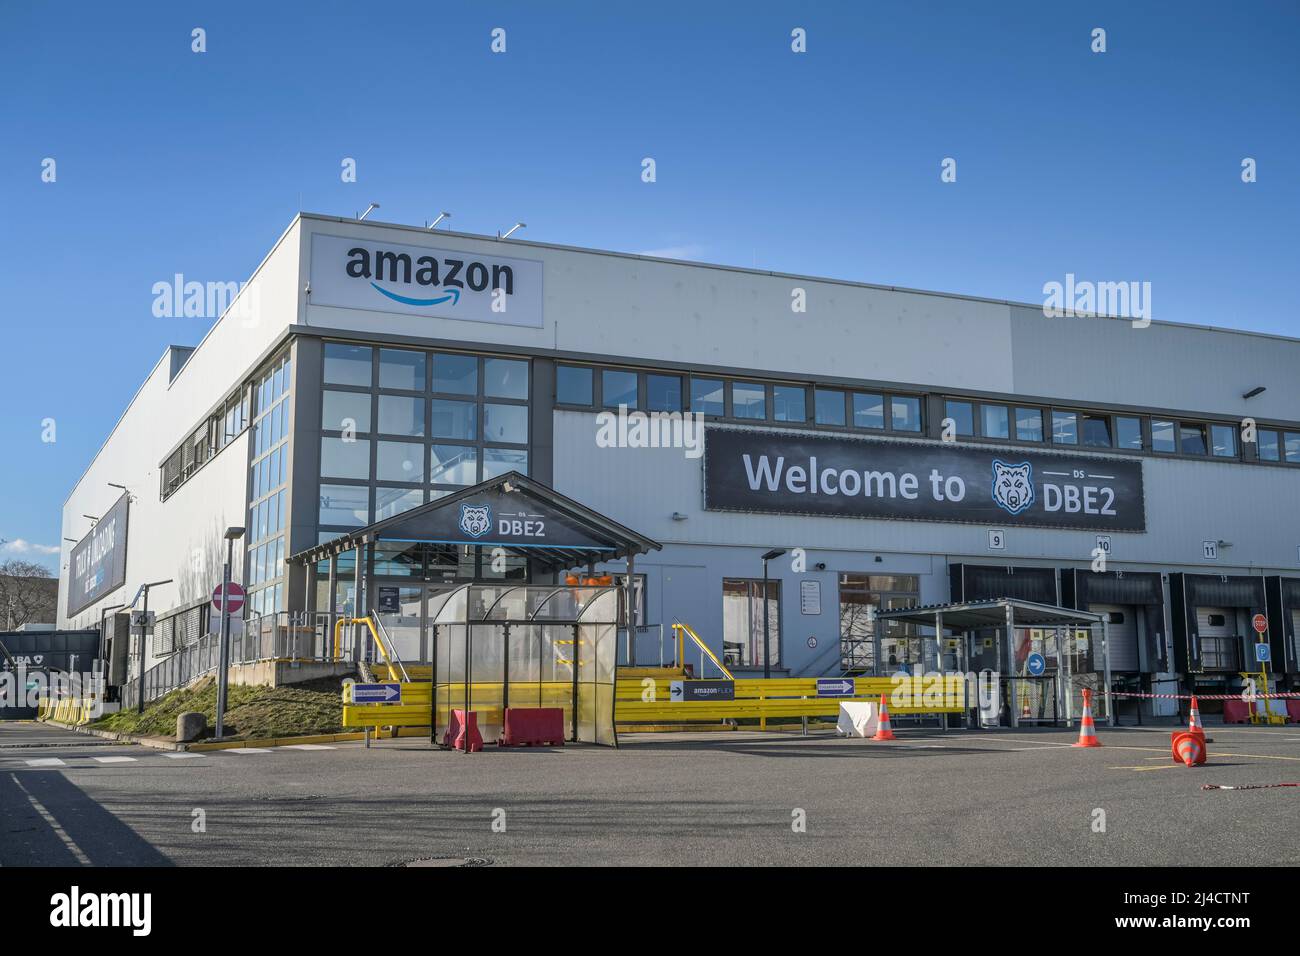 Amazon Parcel Centre DBE2, Porschestrasse, Marienfelde, Tempelhof- Schoeneberg, Berlin, Germany Stock Photo - Alamy